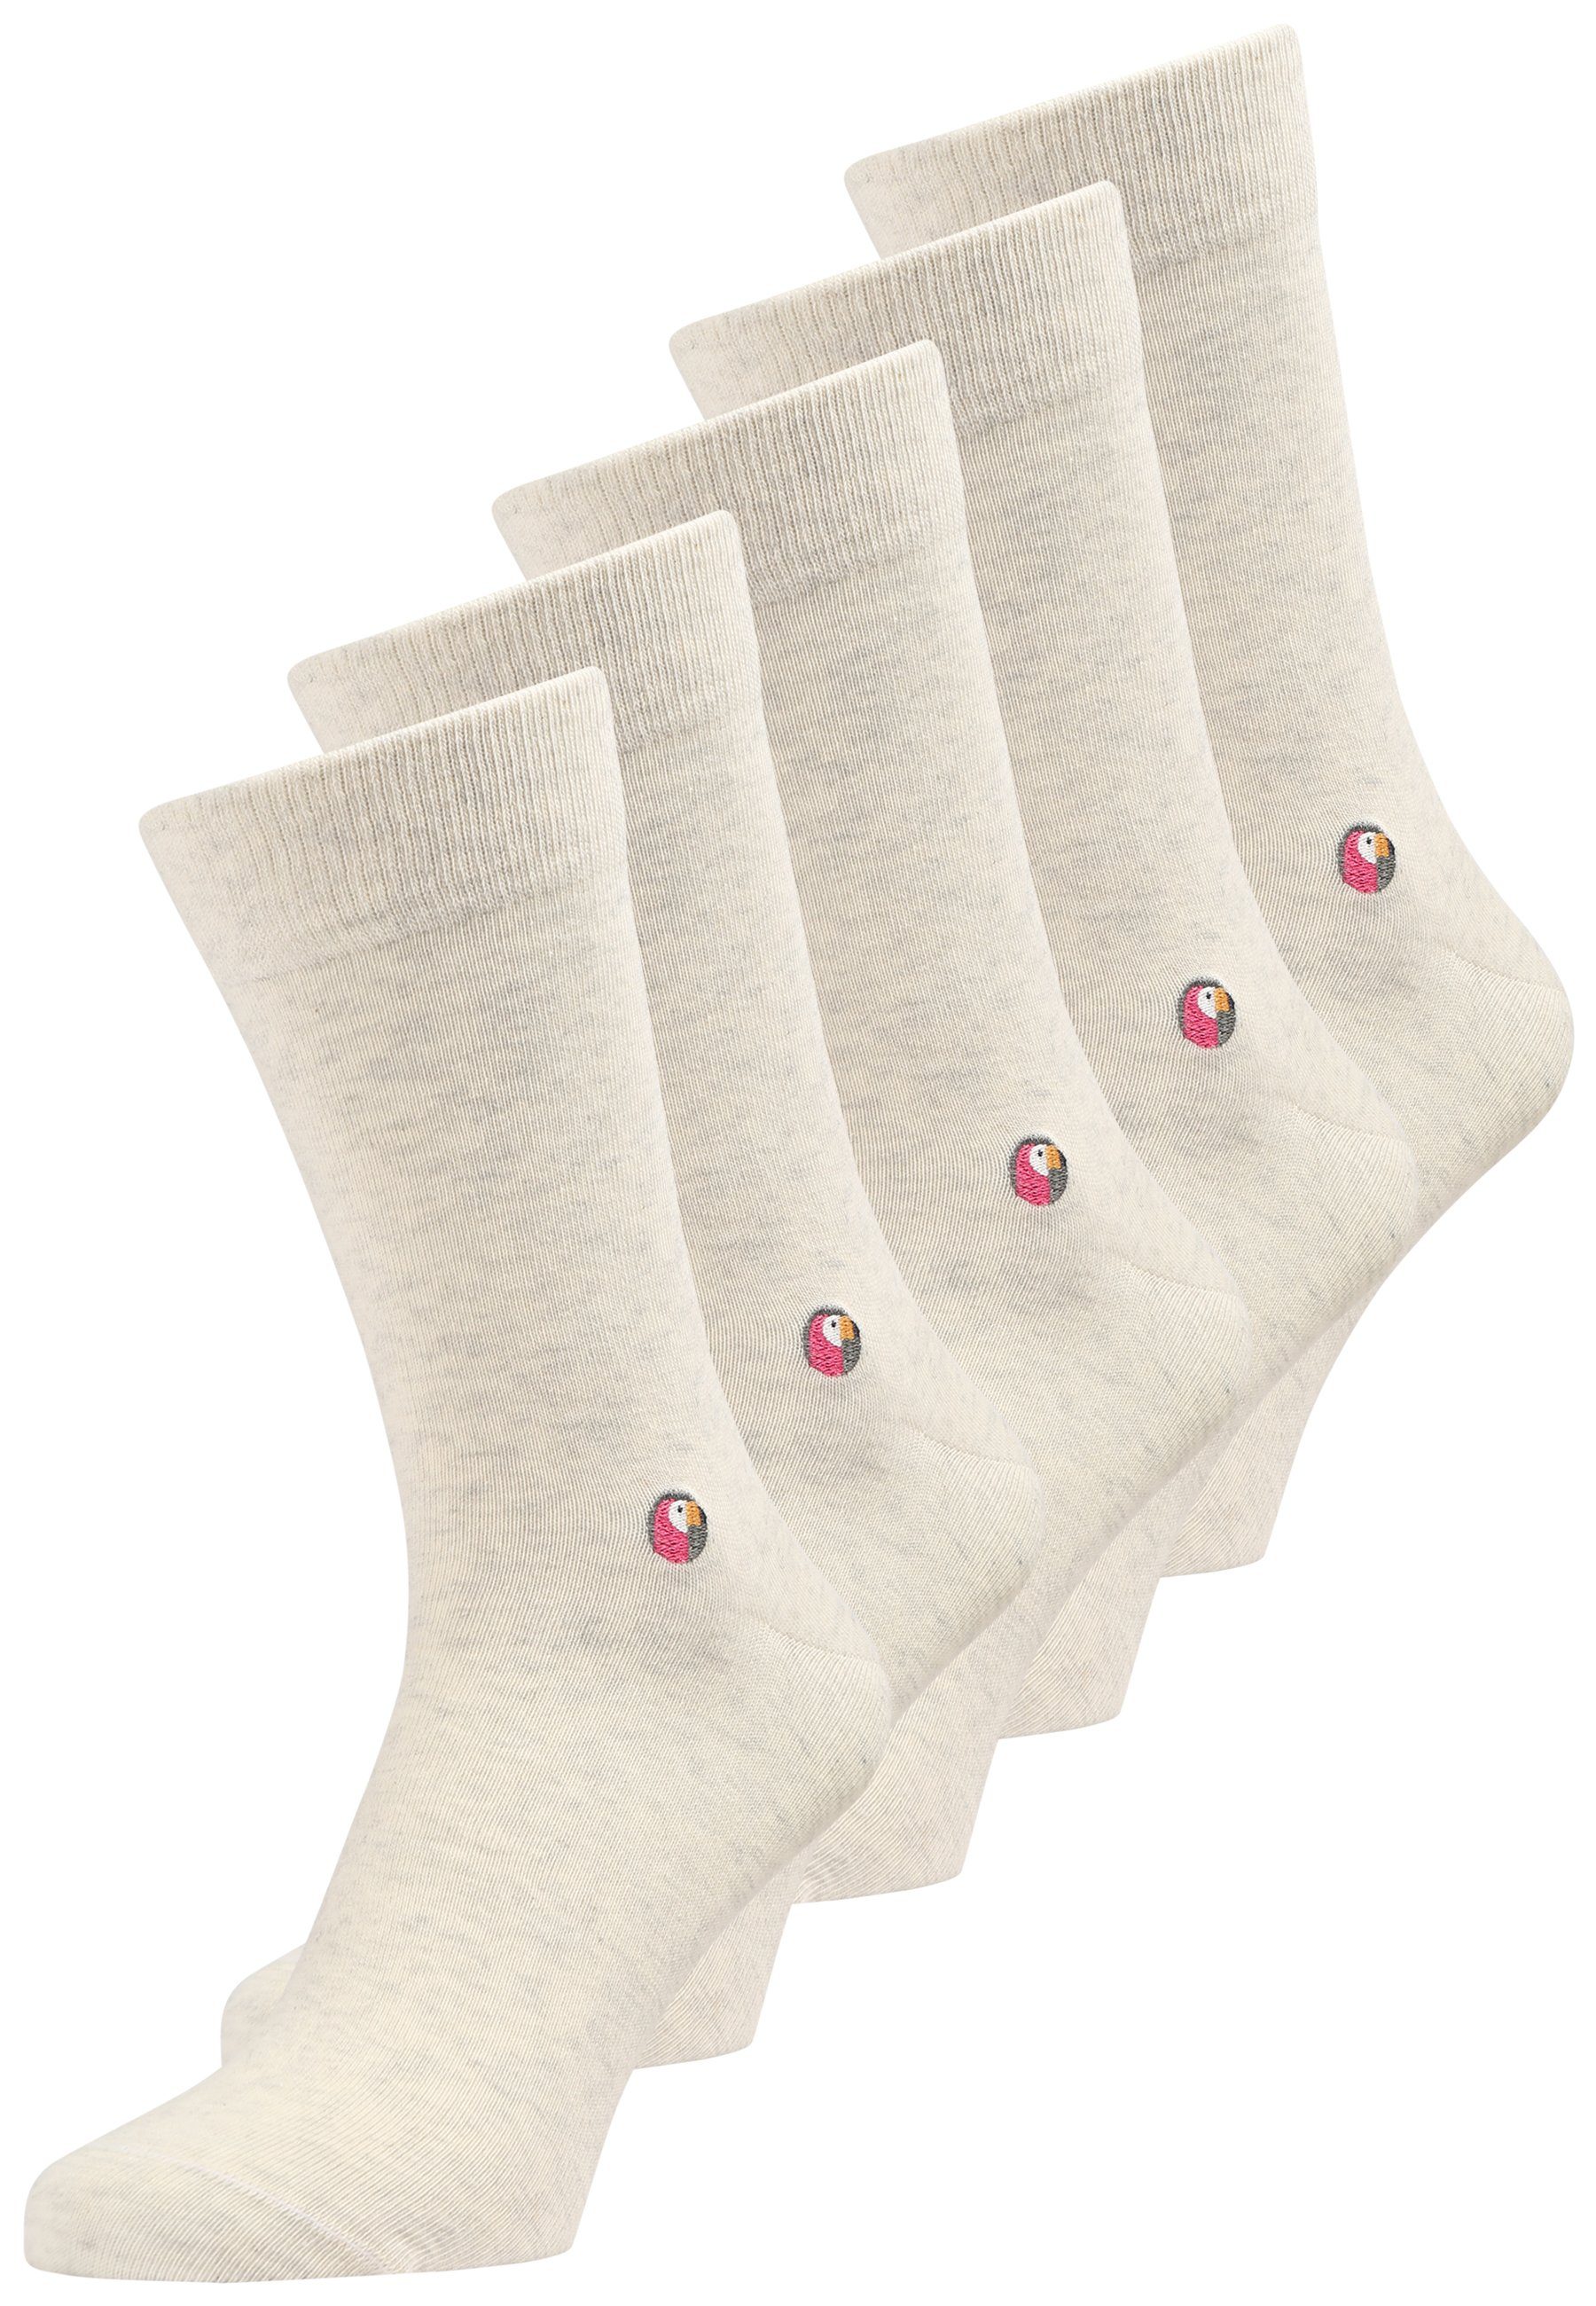 Sokid Socken Set 6 5er Pack (5-Paar) GOTS zertifizierte Bio-Baumwolle